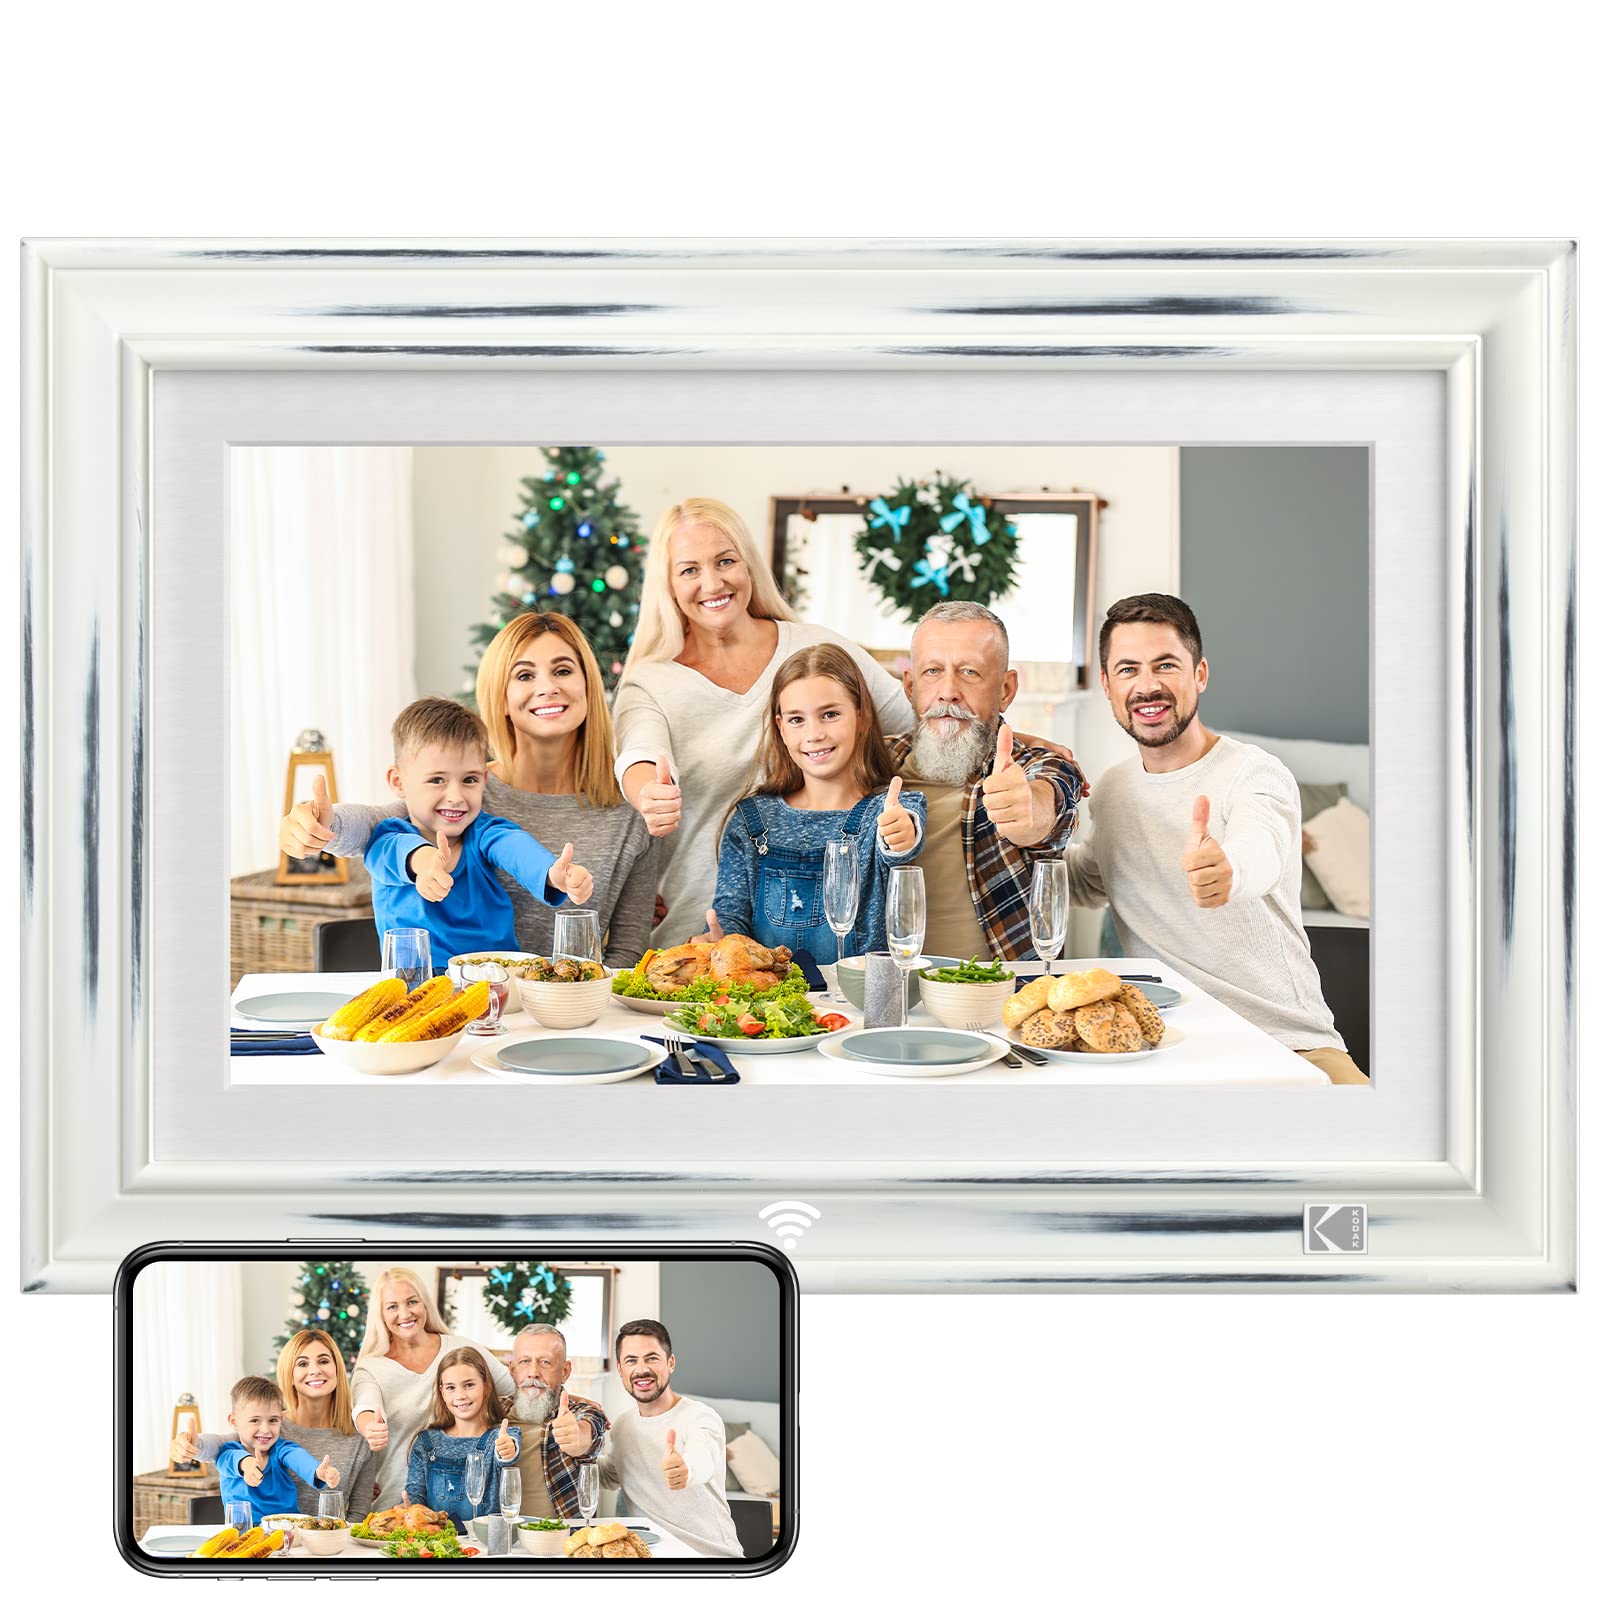 KODAK Digitaler Bilderrahmen 14.1 Zoll WLAN Elektronischer Bilderrahmen Full HD IPS Touchscreen Smart Fotorahmen Cloud mit App, 32GB Speicher, Automatische Drehung, Teilen von Bildern, Musik, Videos